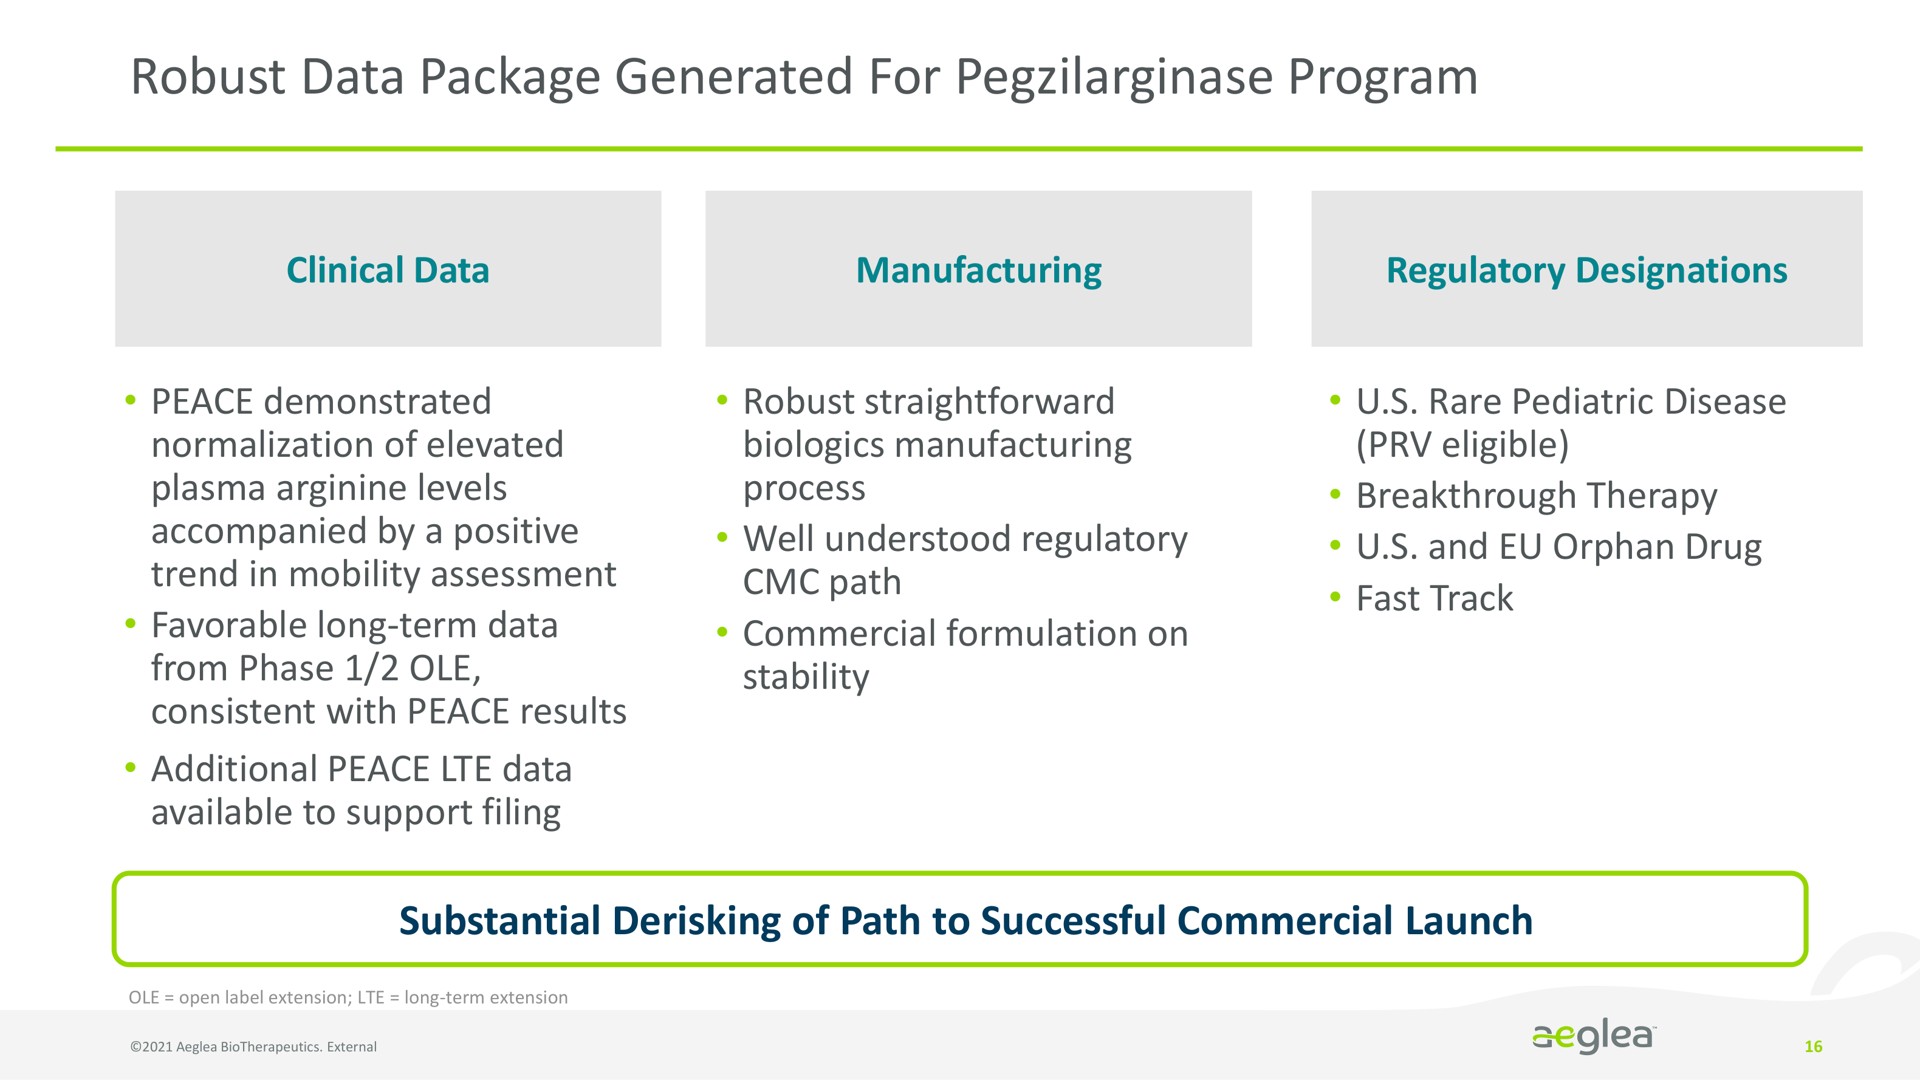 robust data package generated for program | Aeglea BioTherapeutics